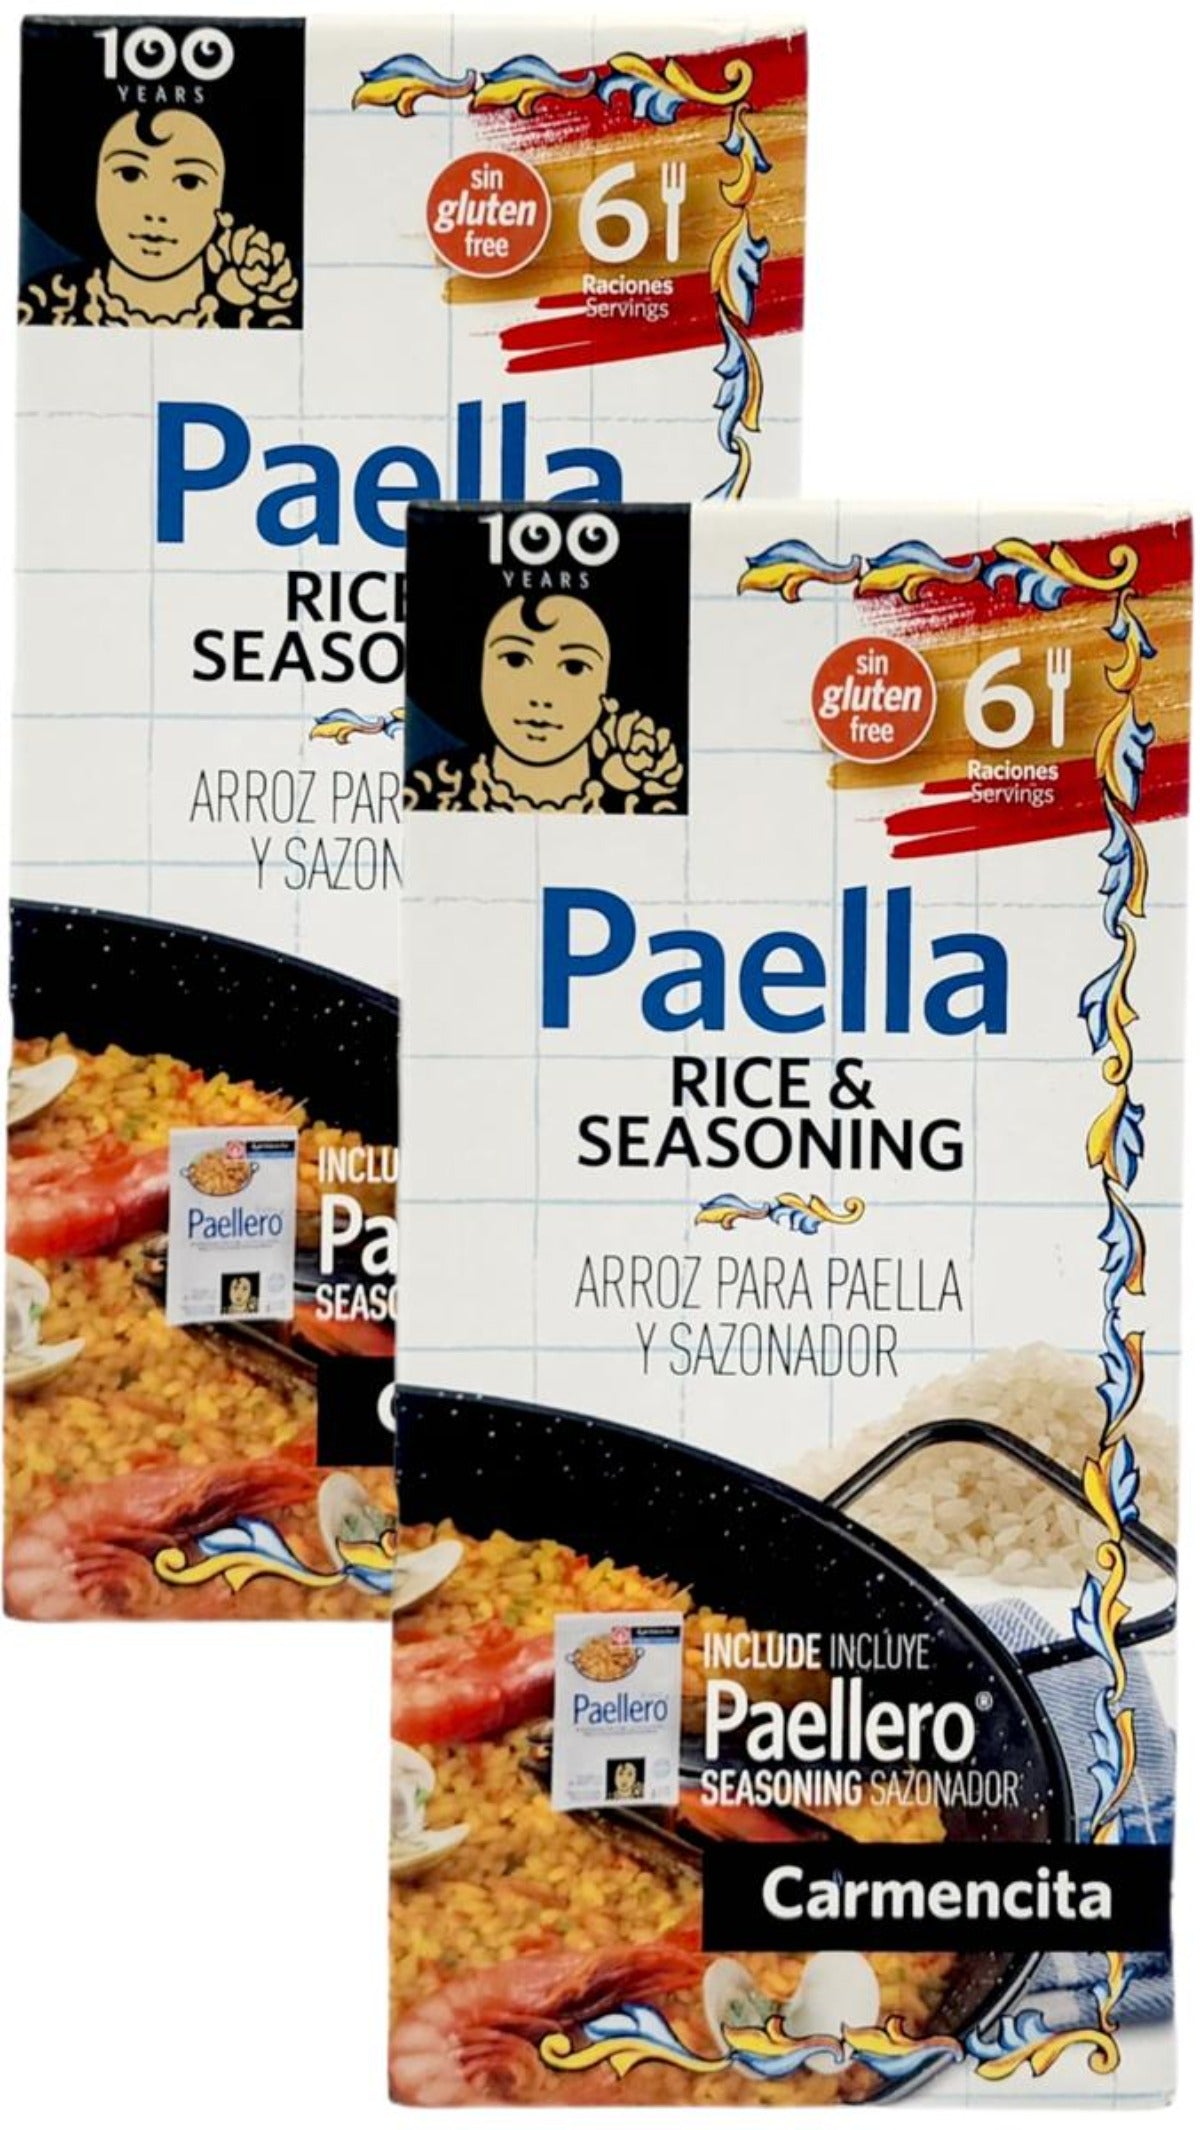 Carmencita Spanish Paella Rice And Seasoning 604g - 2 Pack 1.2kg total Best Before March 2025